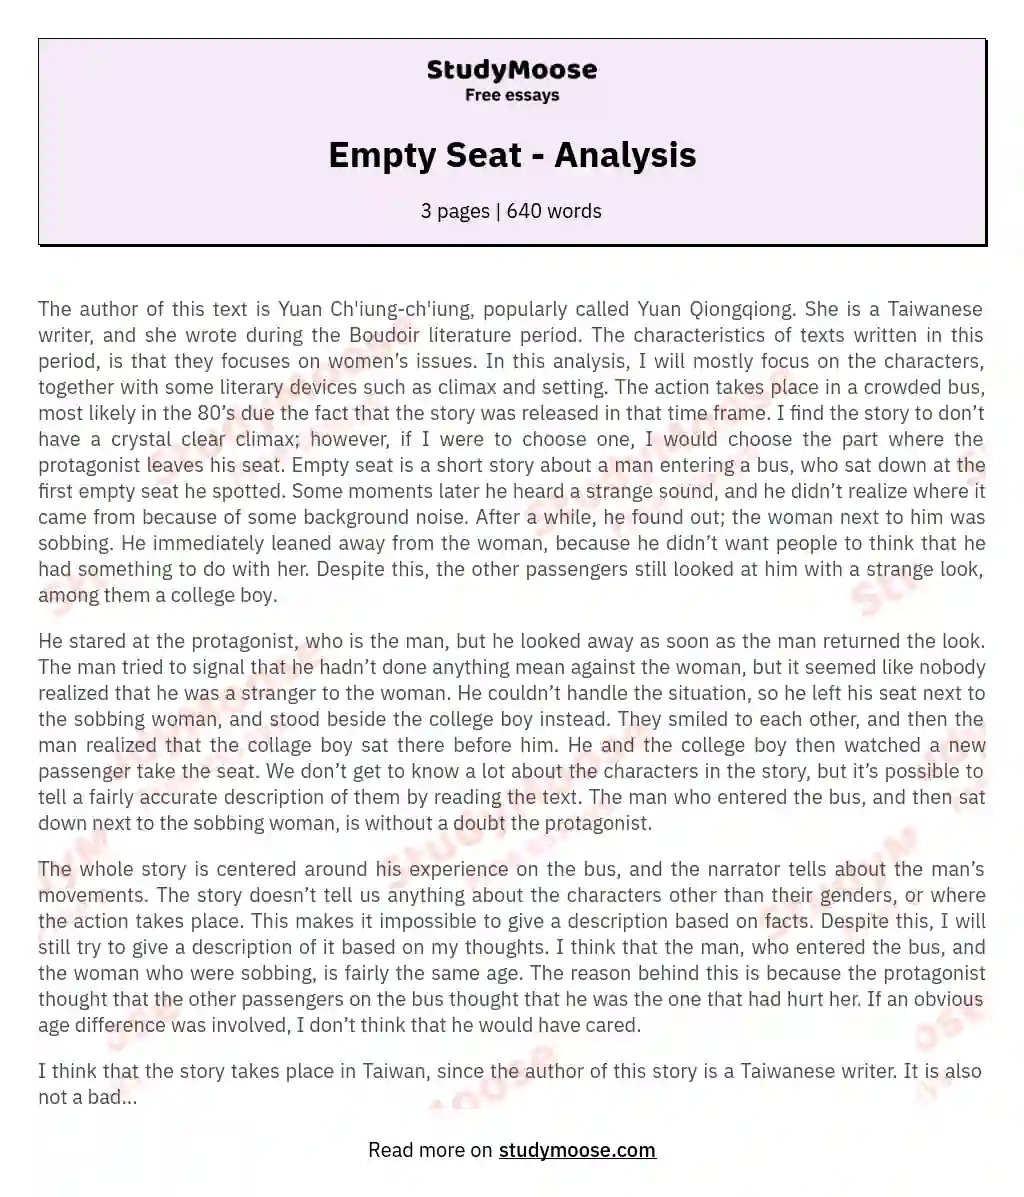 Empty Seat - Analysis essay